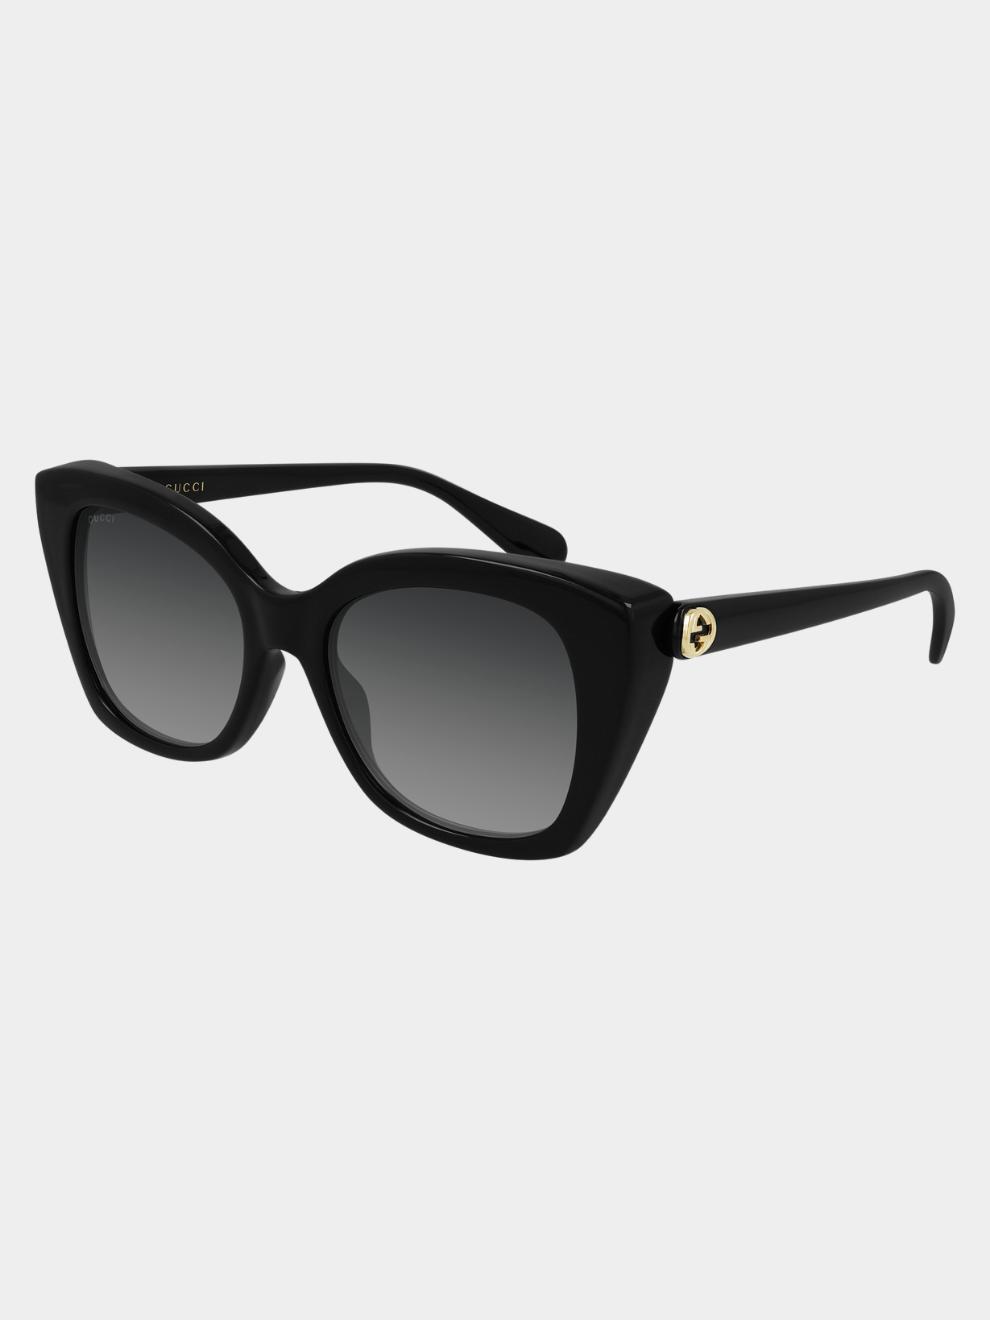 GG0921S001 Gucci Cat Eye Sunglasses in Black